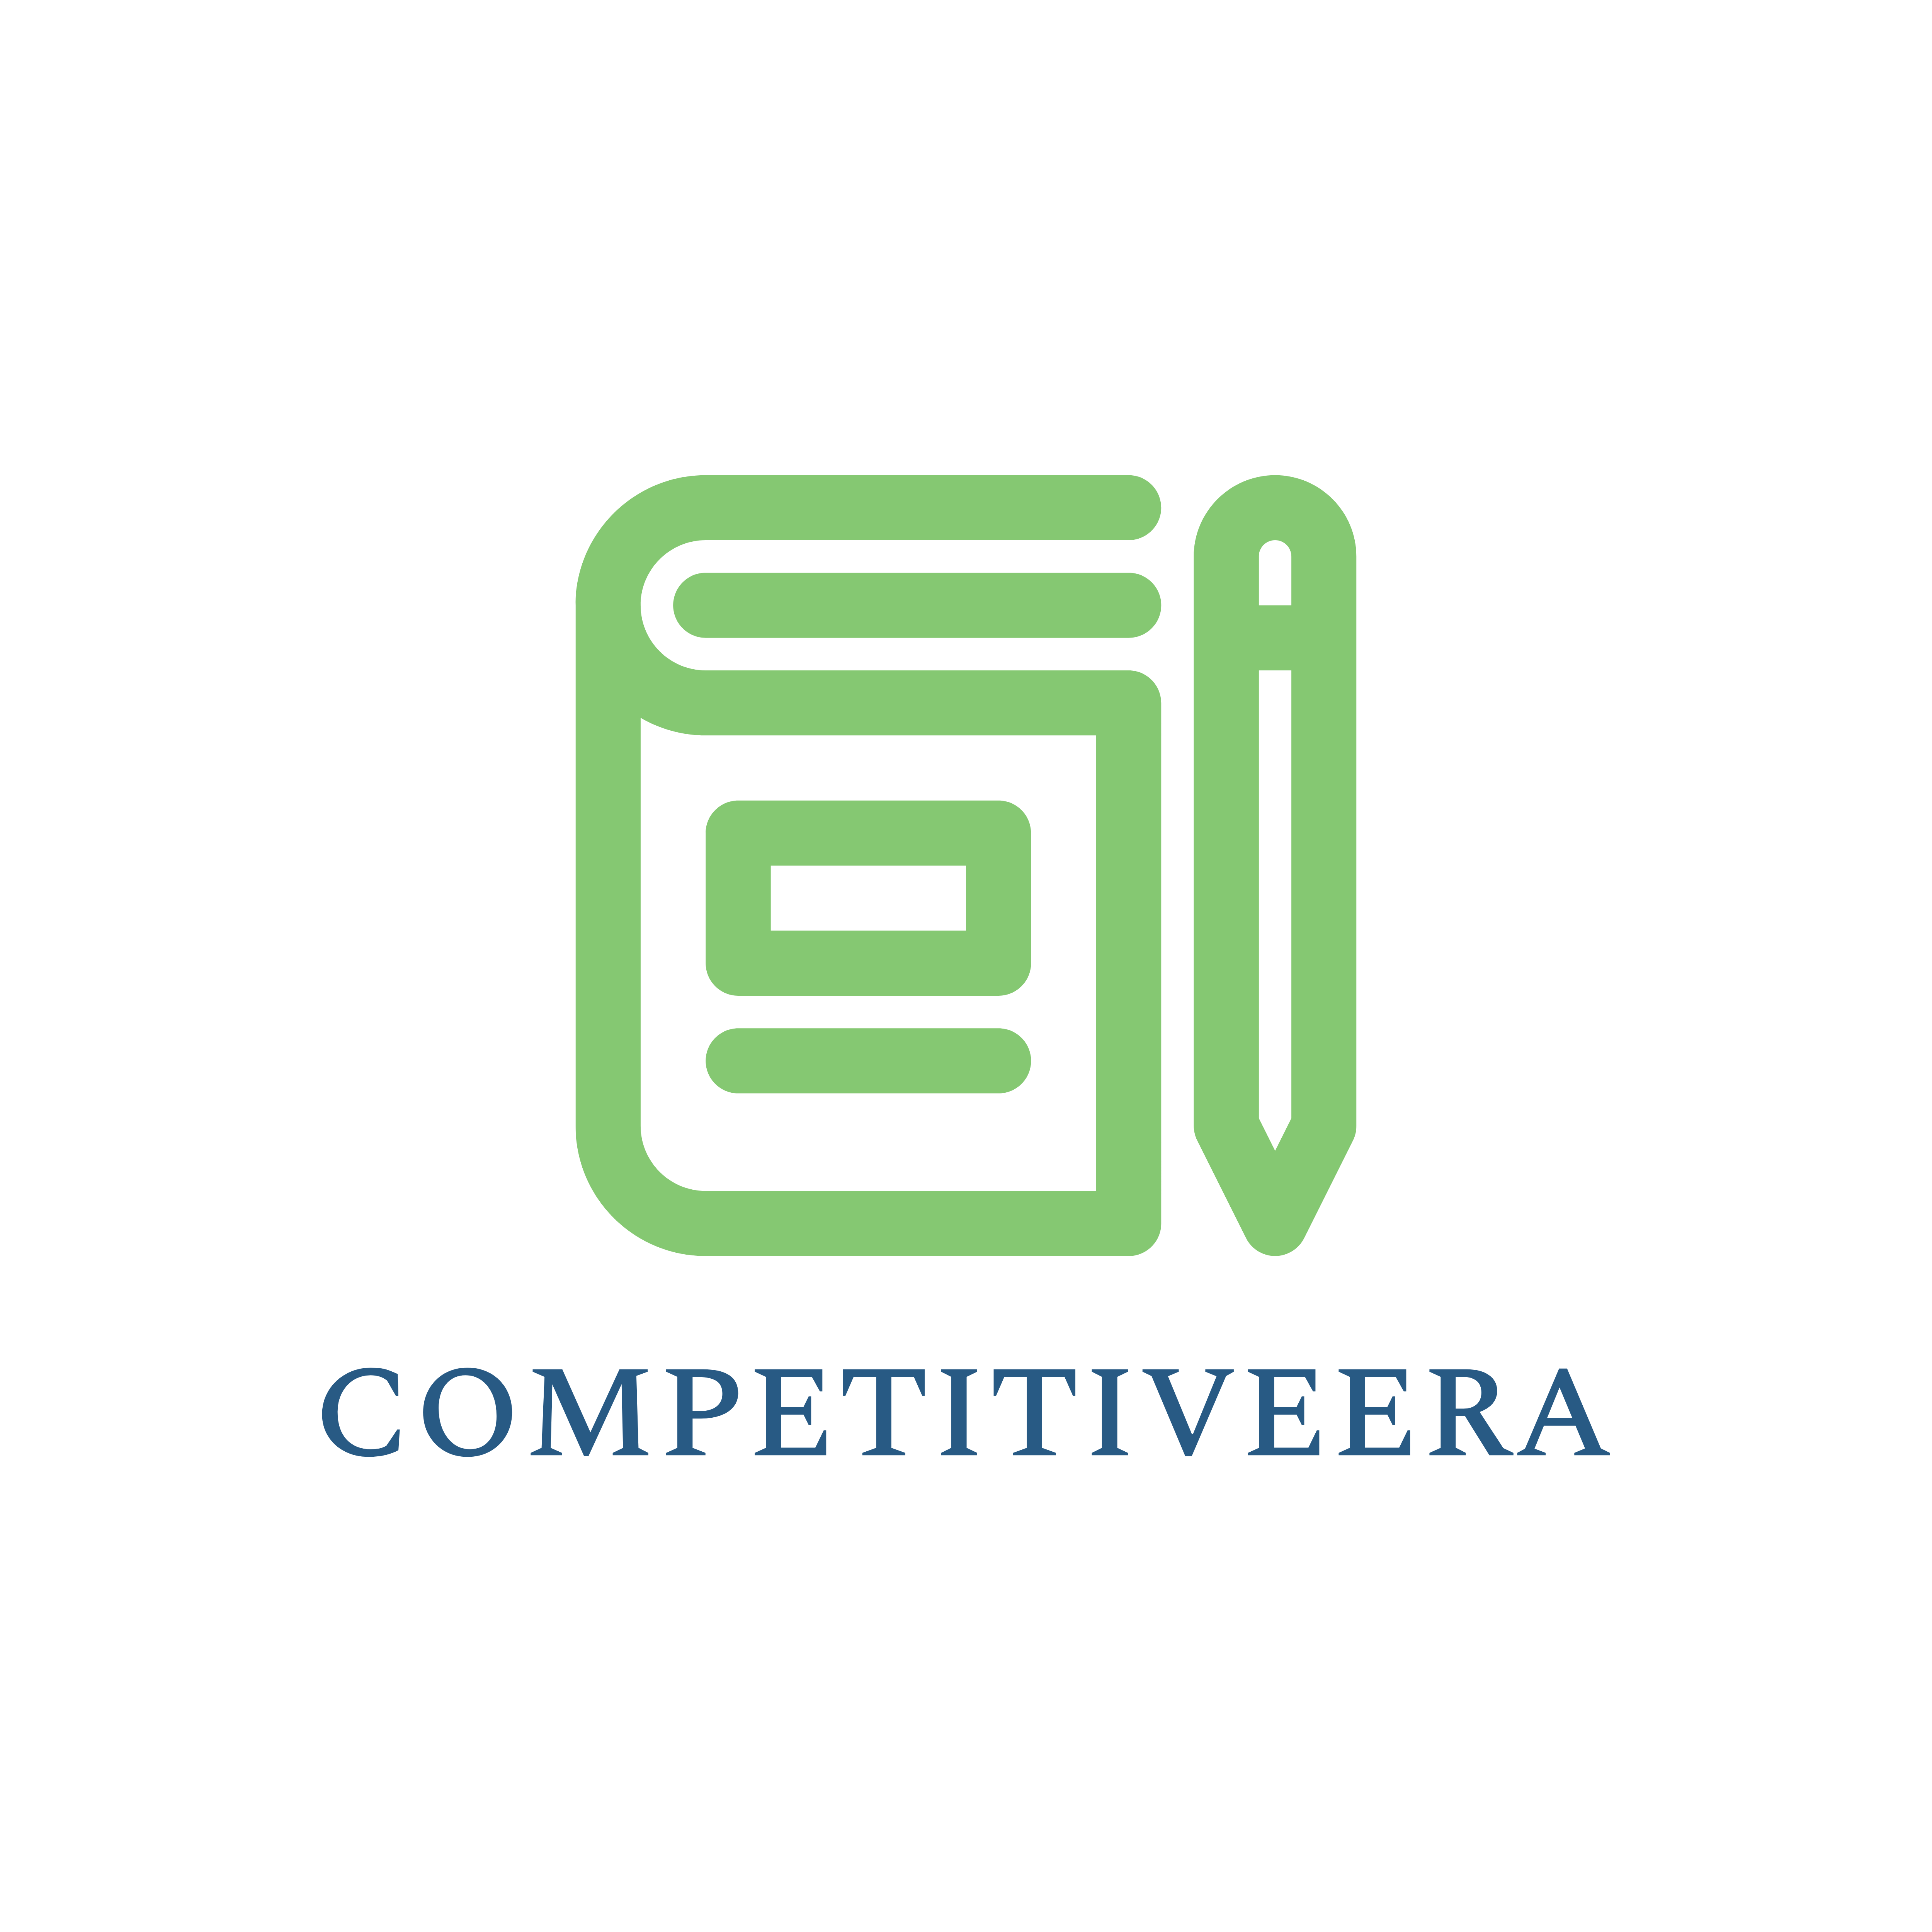 Competitiveera single feature